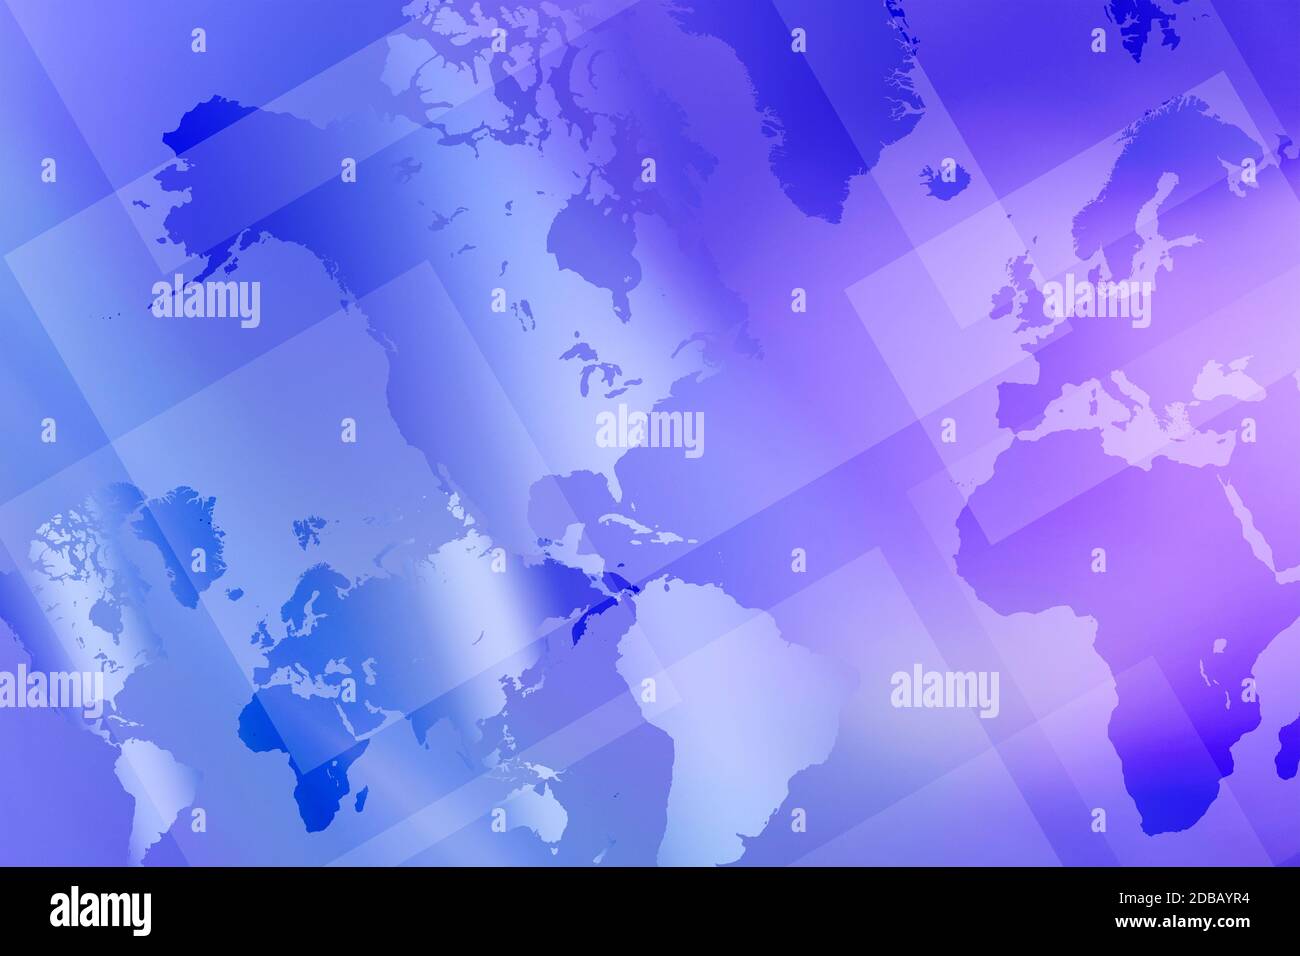 Blue abstract digital world map Stock Photo